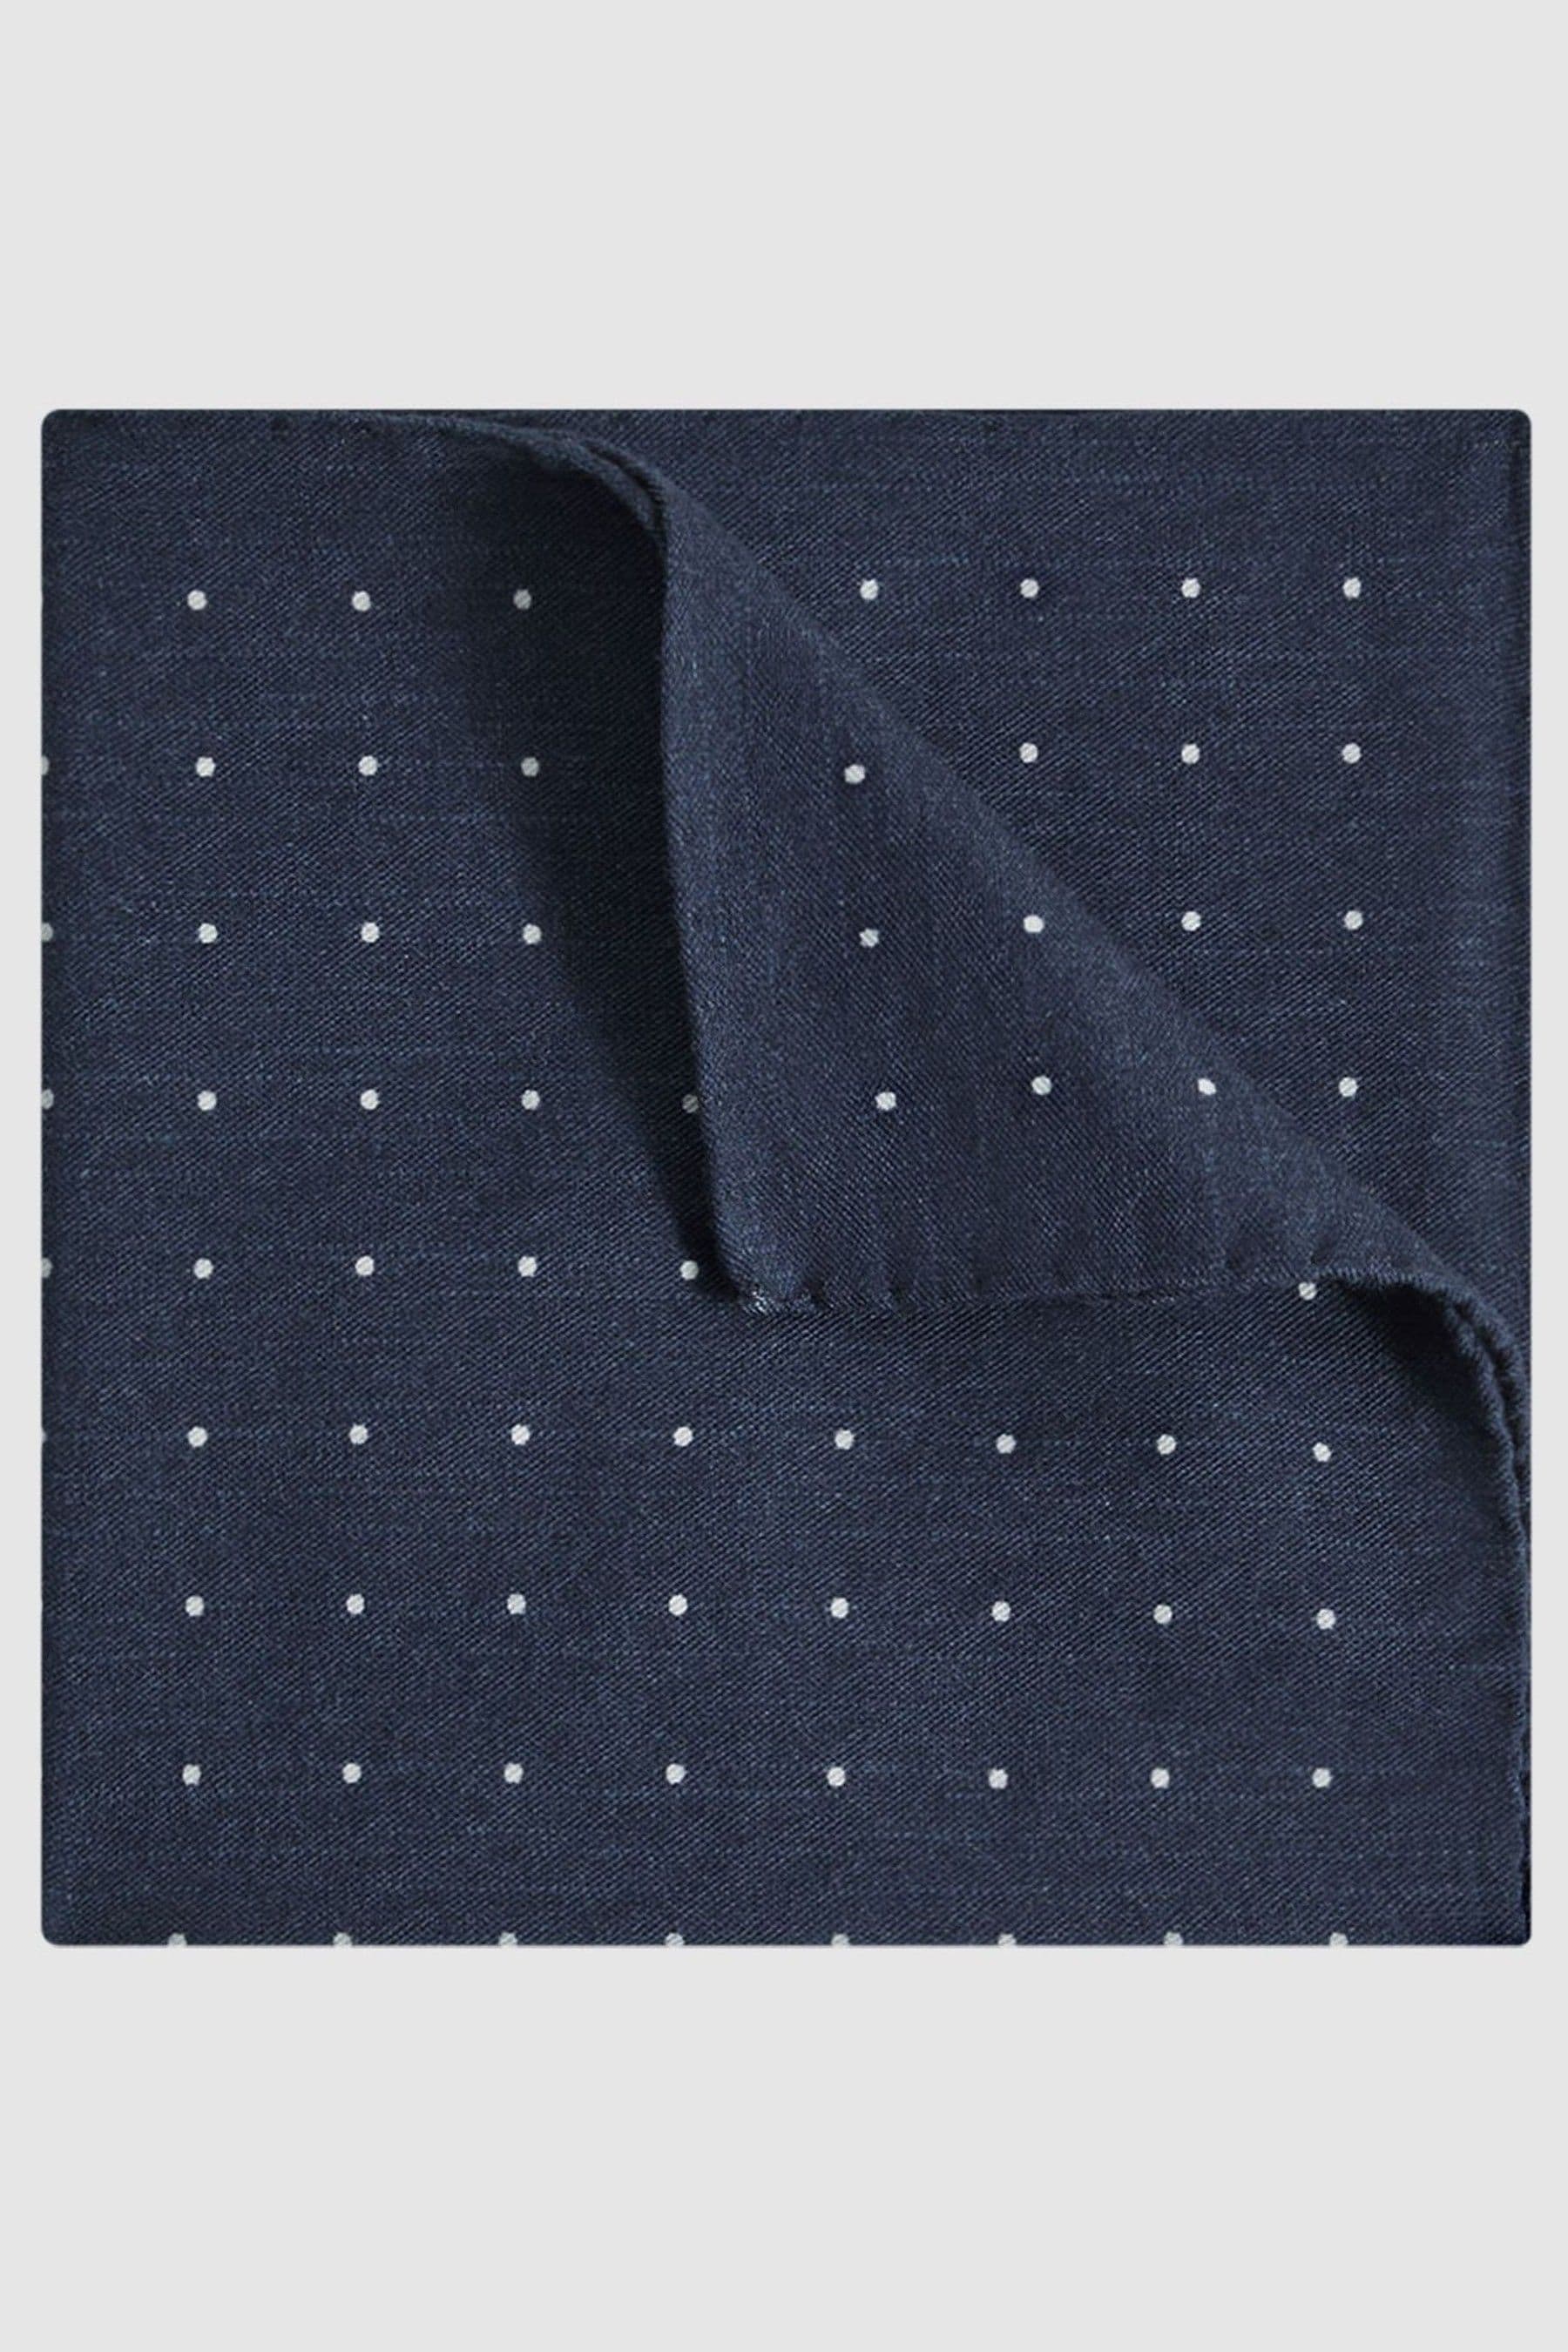 Reiss Tuscan - Navy Cotton-wool Polka Dot Pocket Square, One